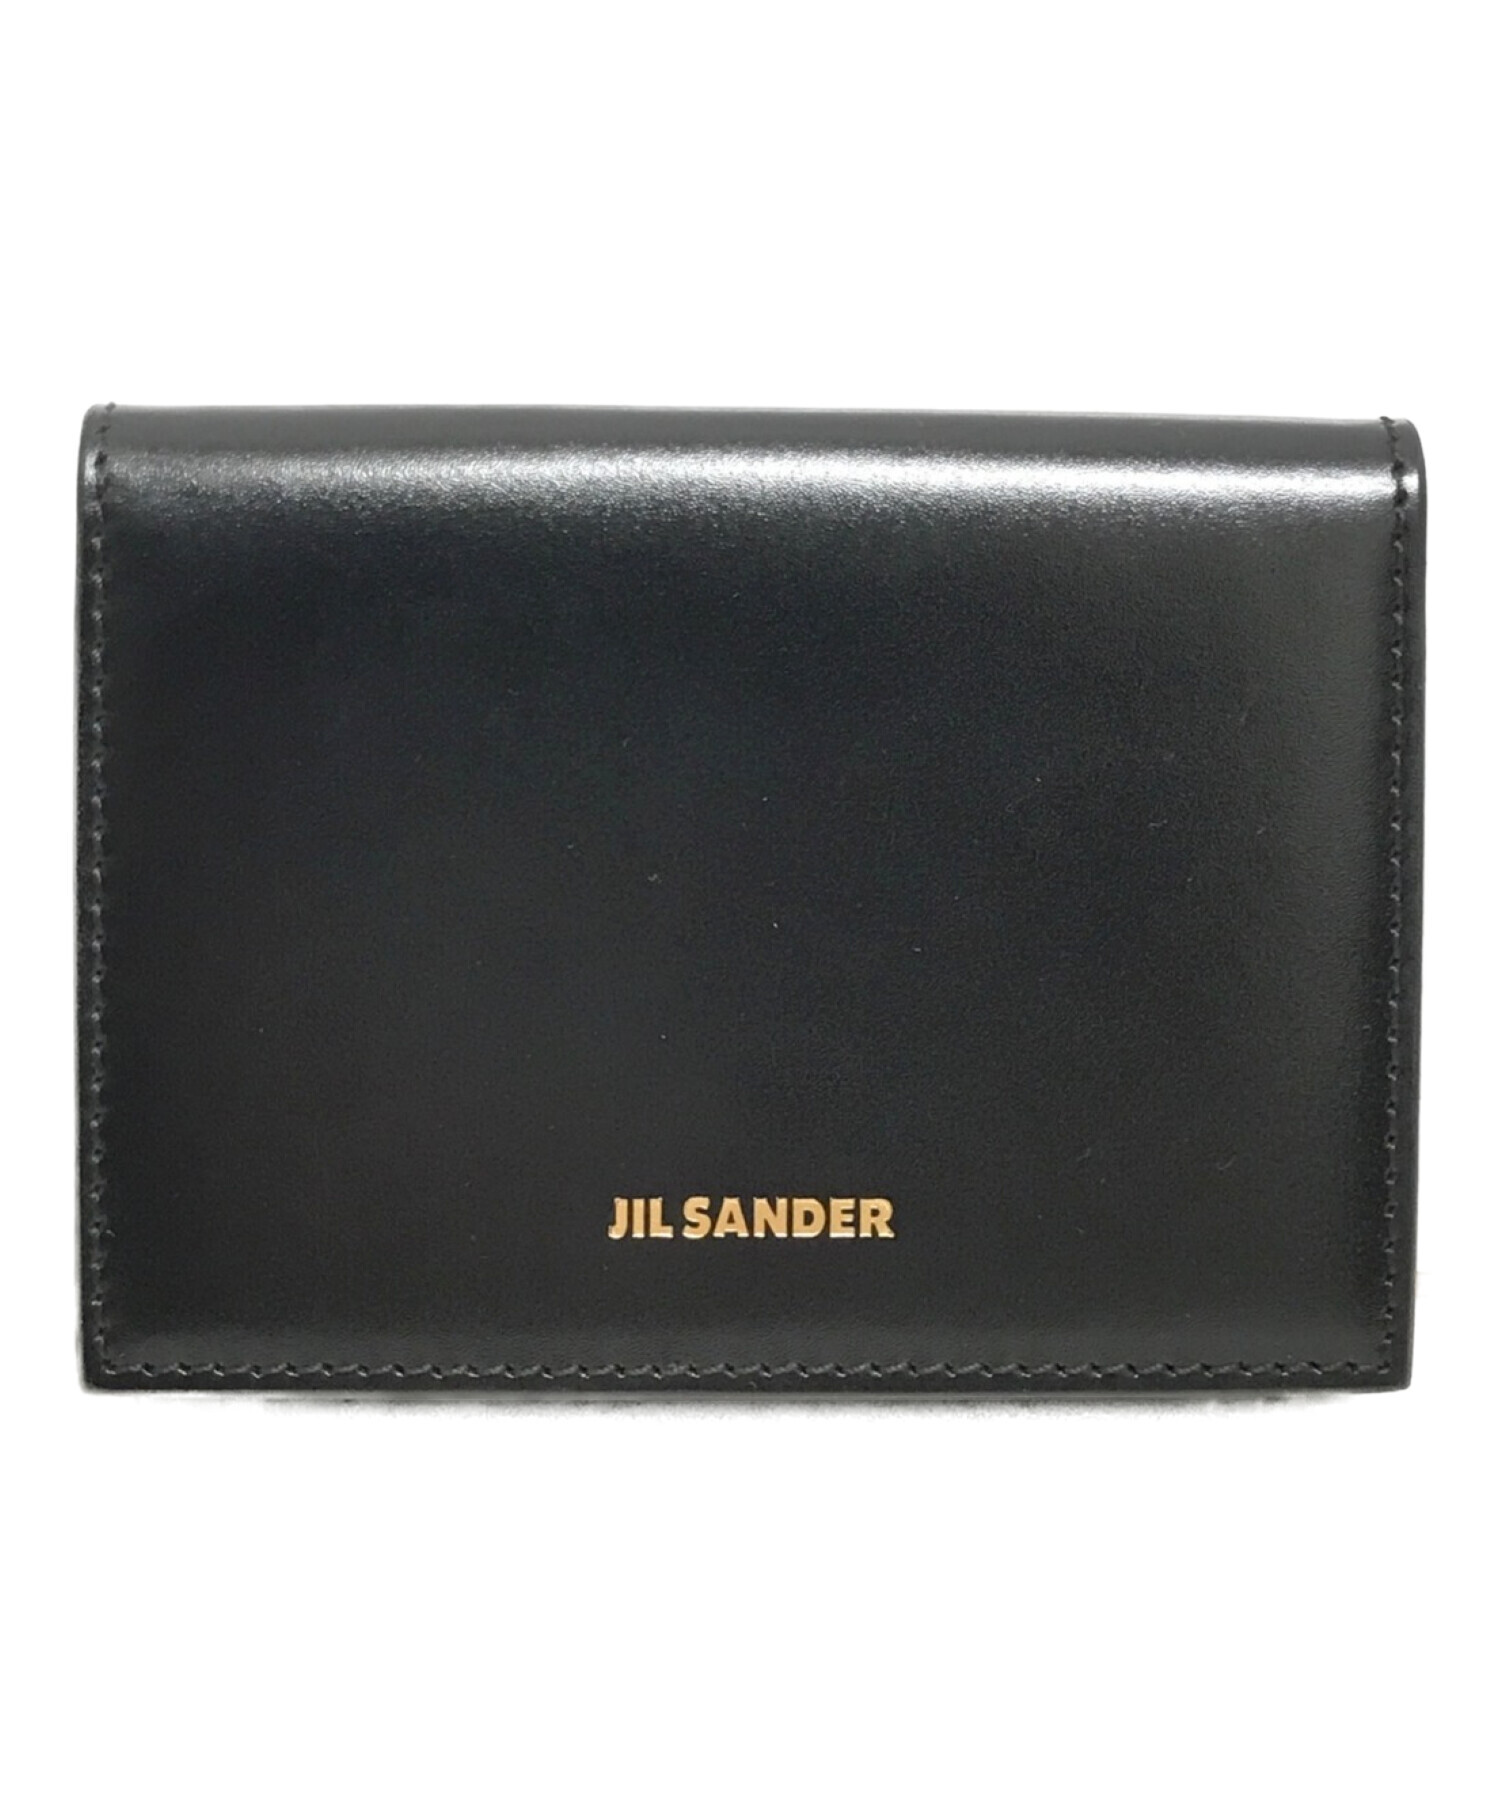 JIL SANDER (ジルサンダー) ロゴ 3つ折りコンパクト財布 ブラック サイズ:下記参照